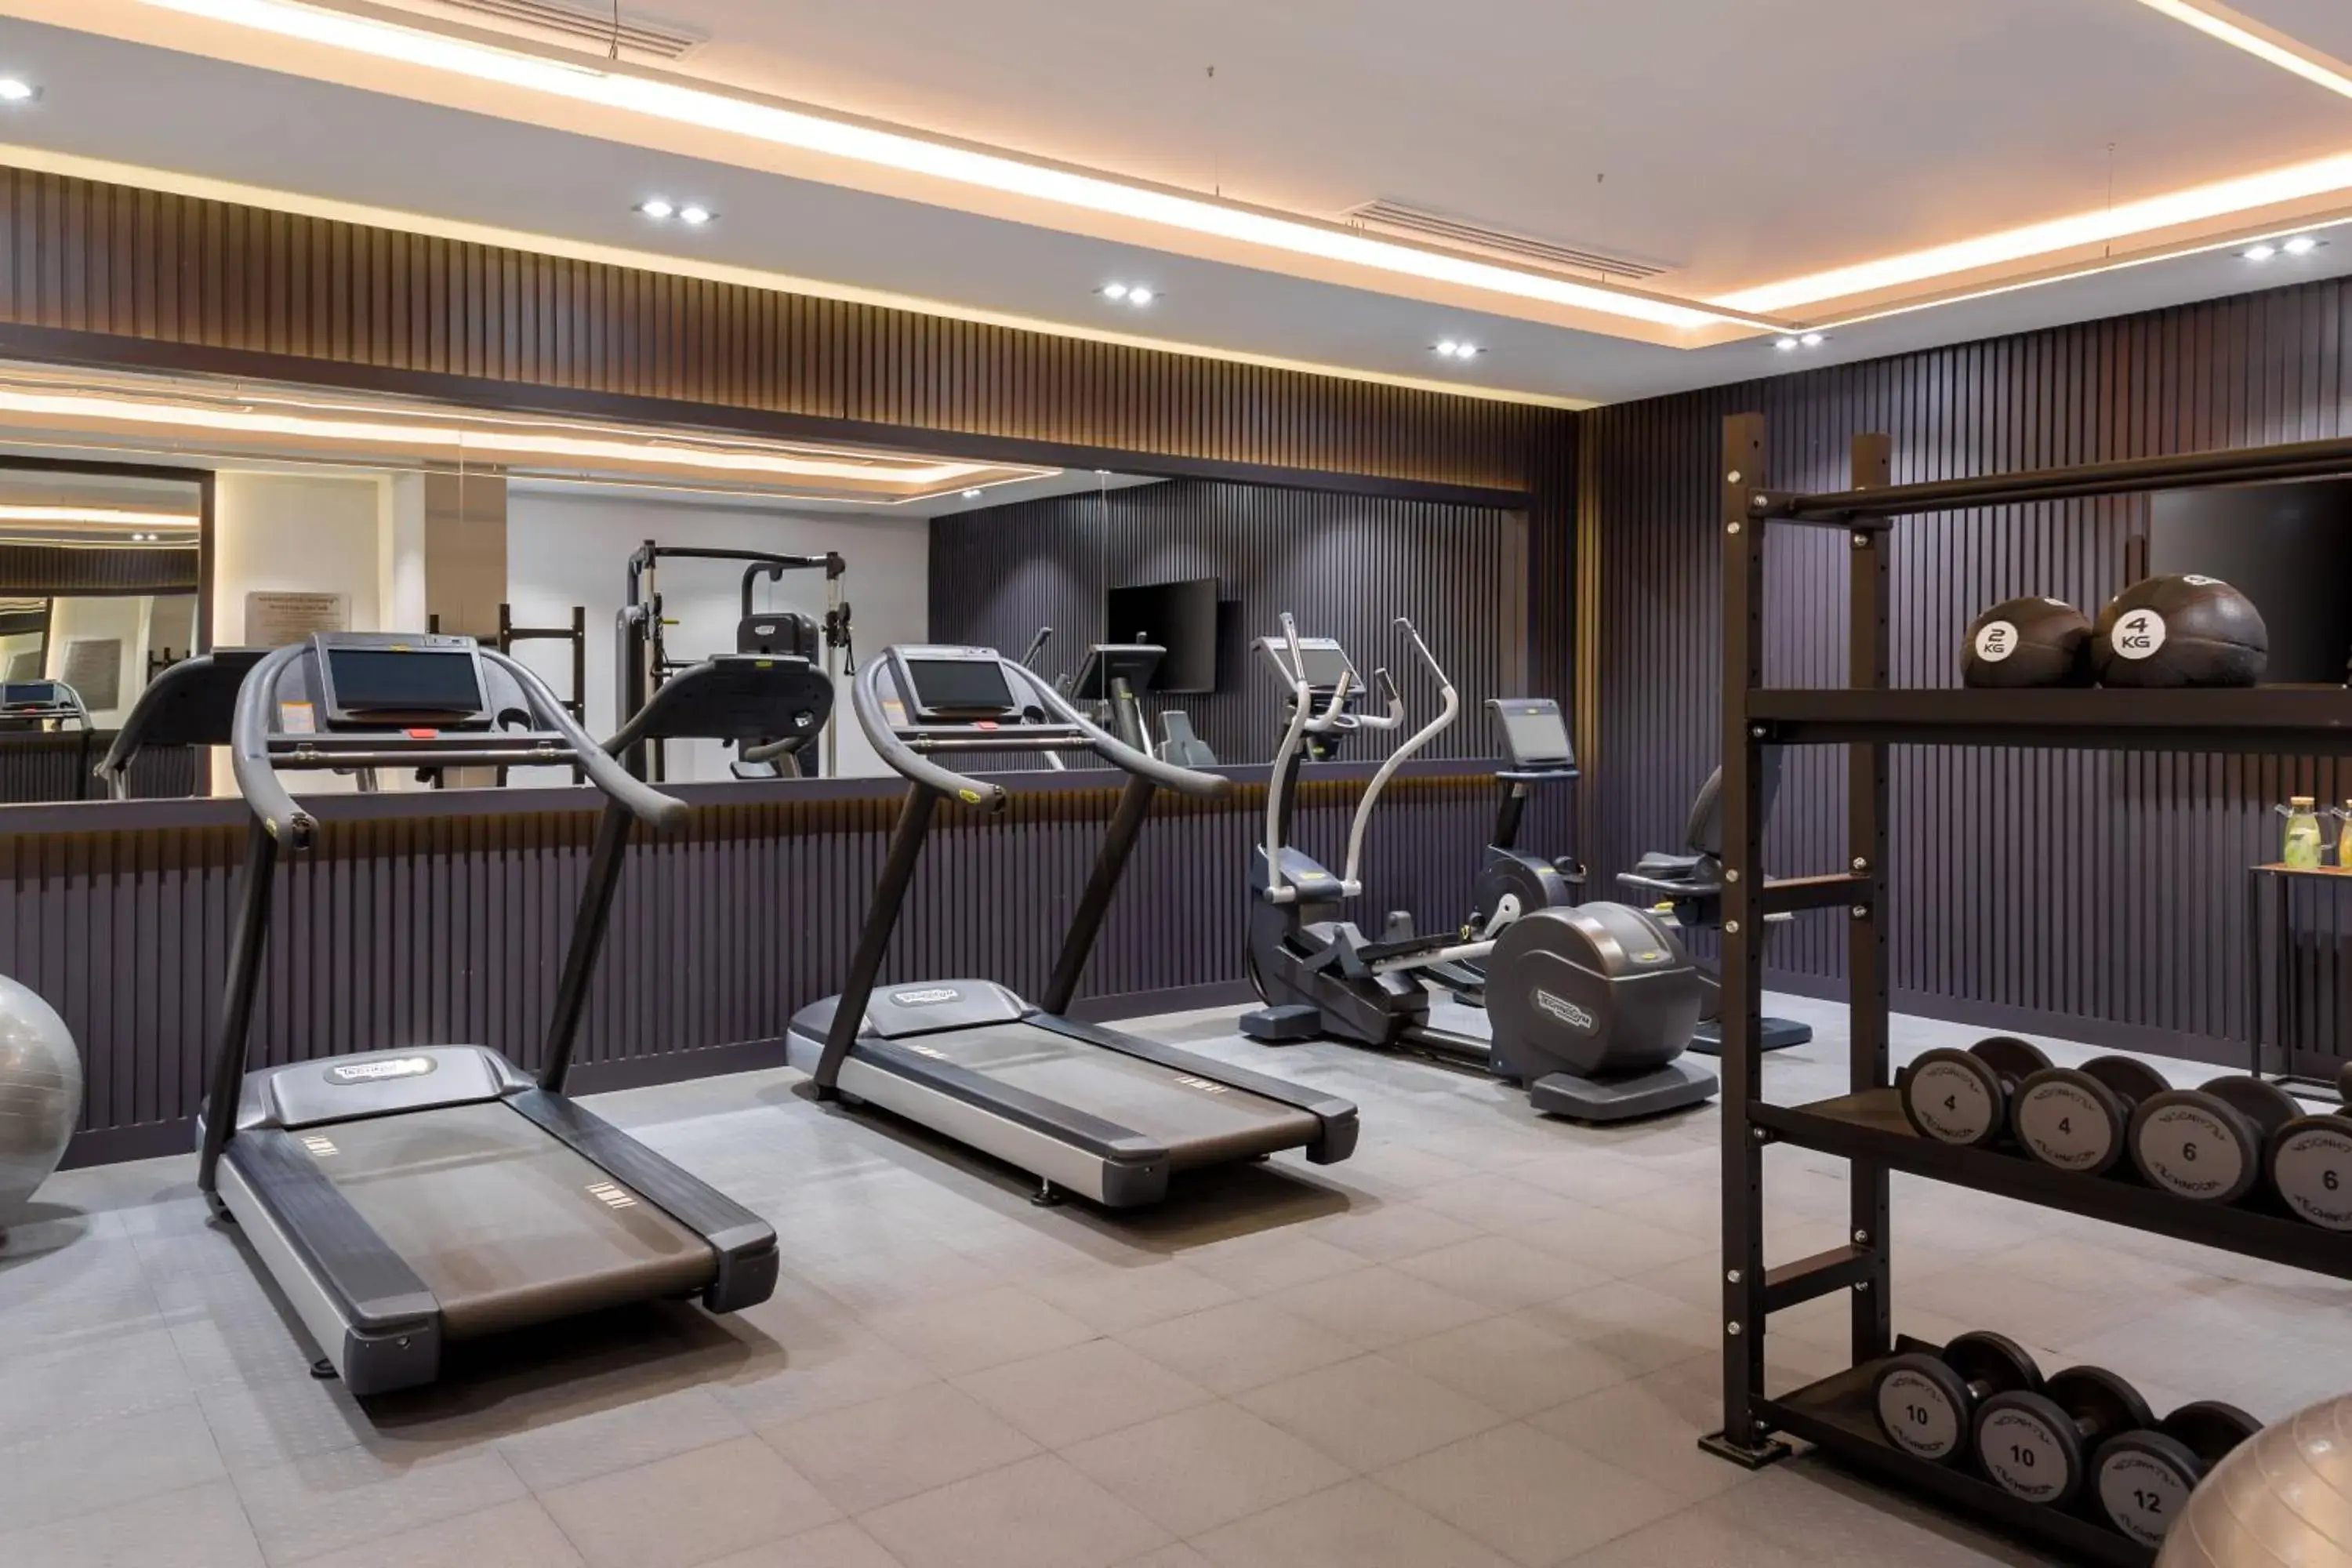 Fitness centre/facilities, Fitness Center/Facilities in Courtyard by Marriott Tashkent